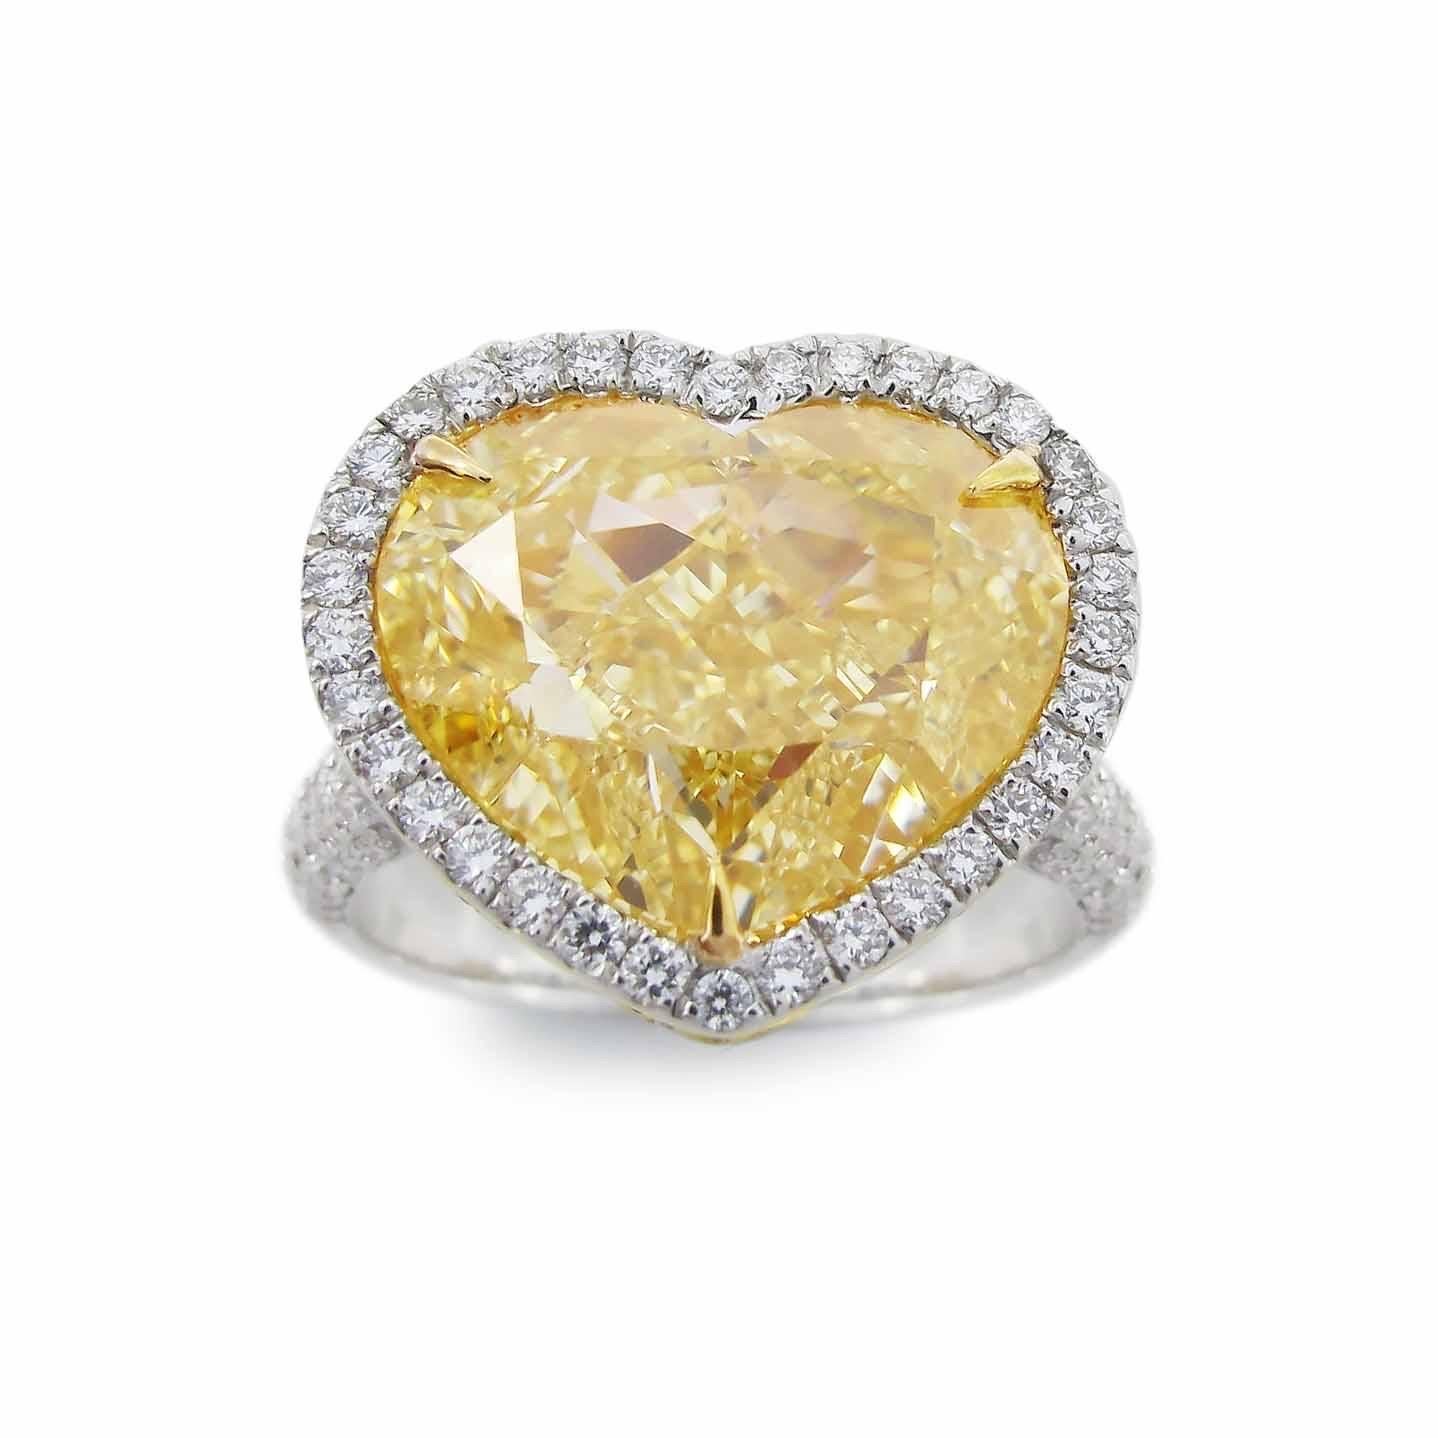 Heart Cut Emilio Jewelry Gia Certified 12.00 Carat Fancy Yellow Diamond Ring For Sale